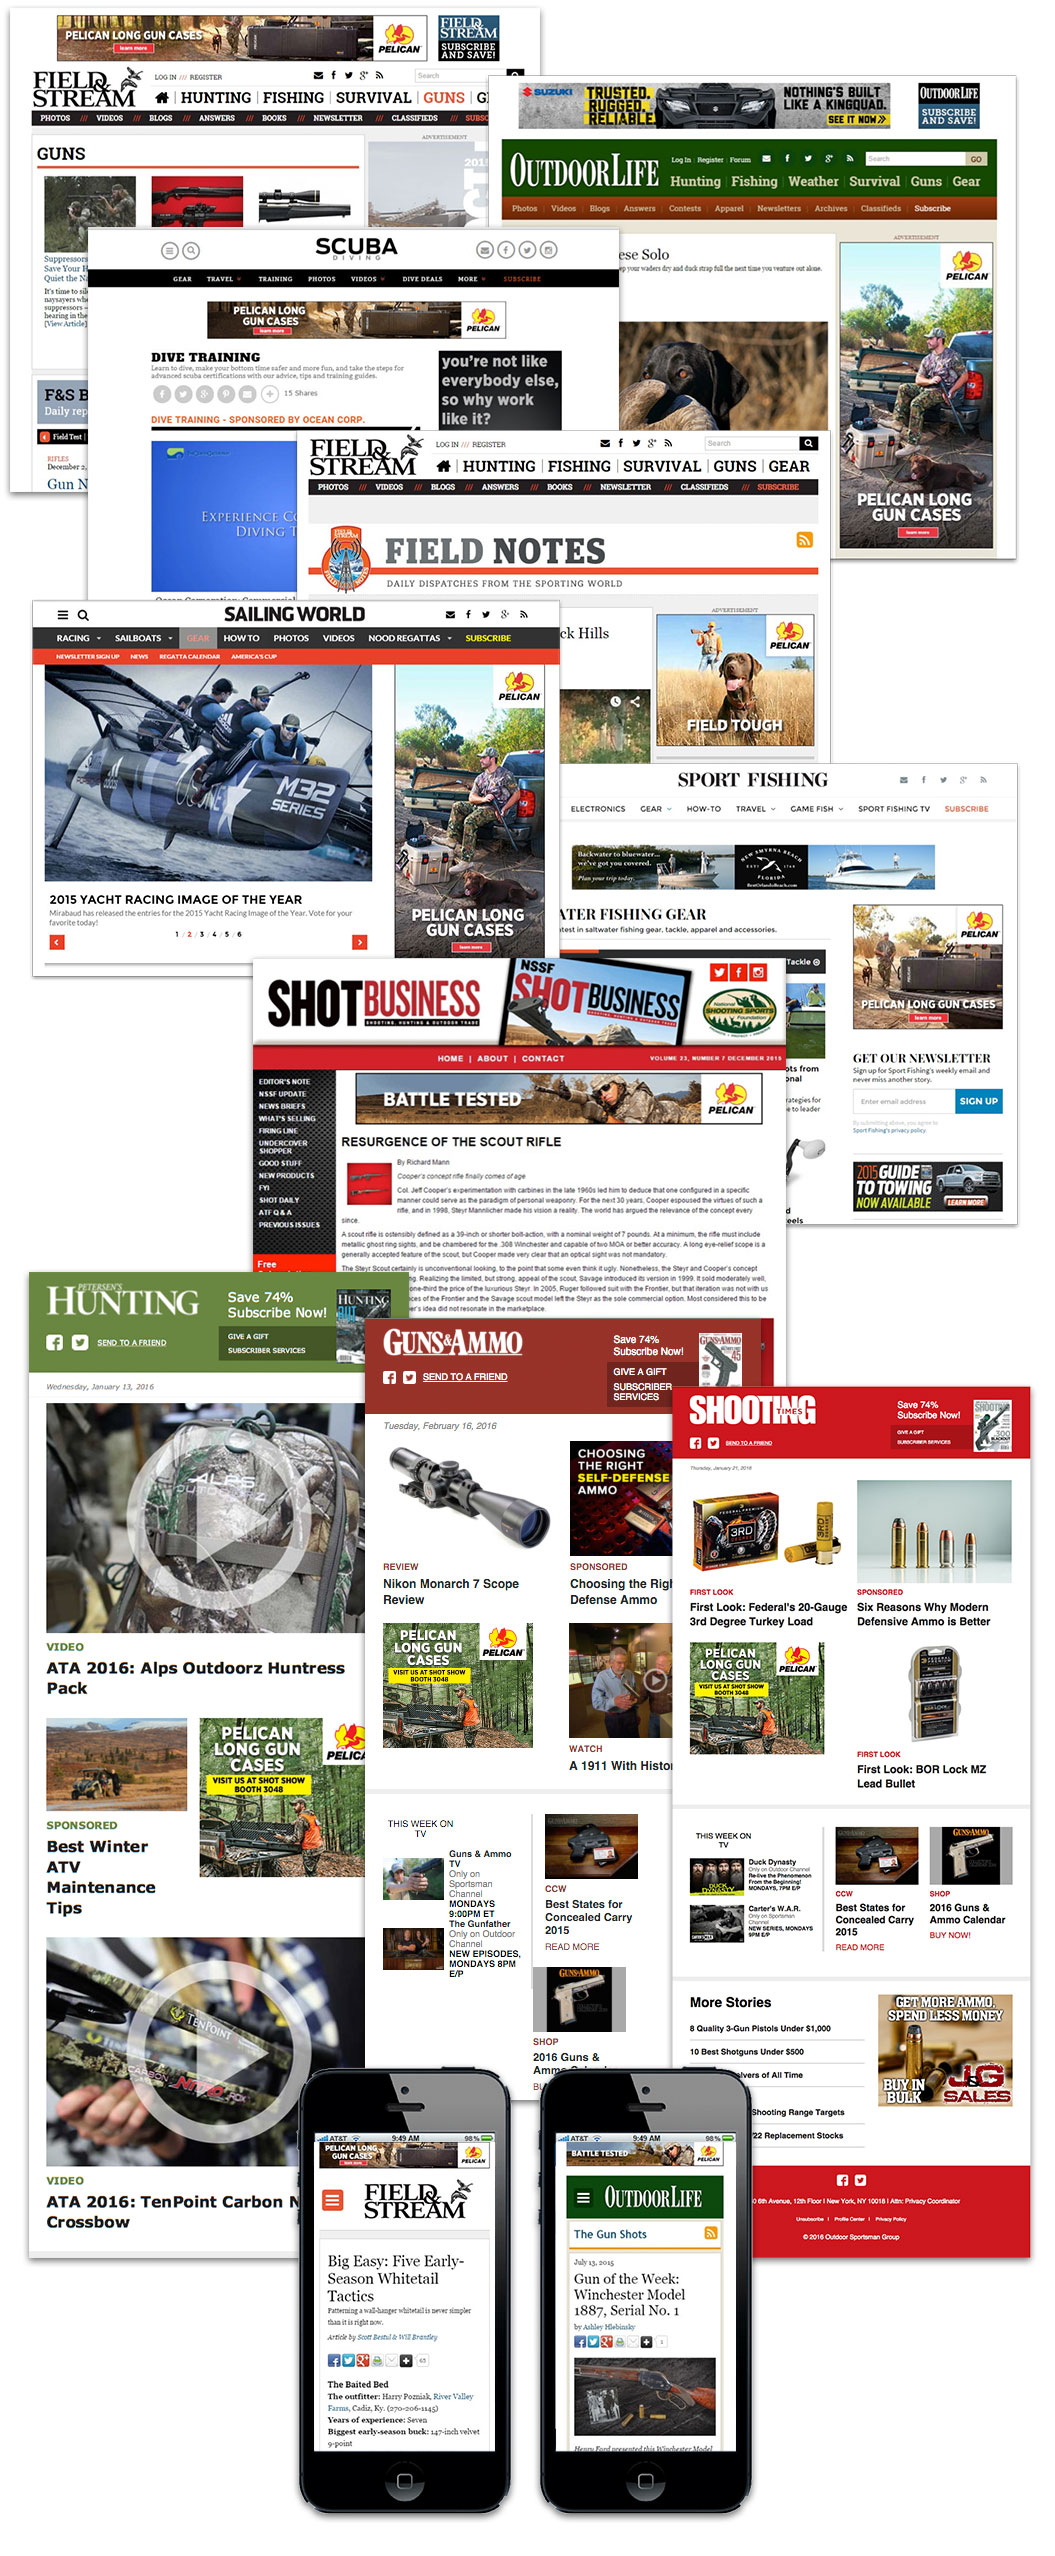 Pelican gun case advertising media page